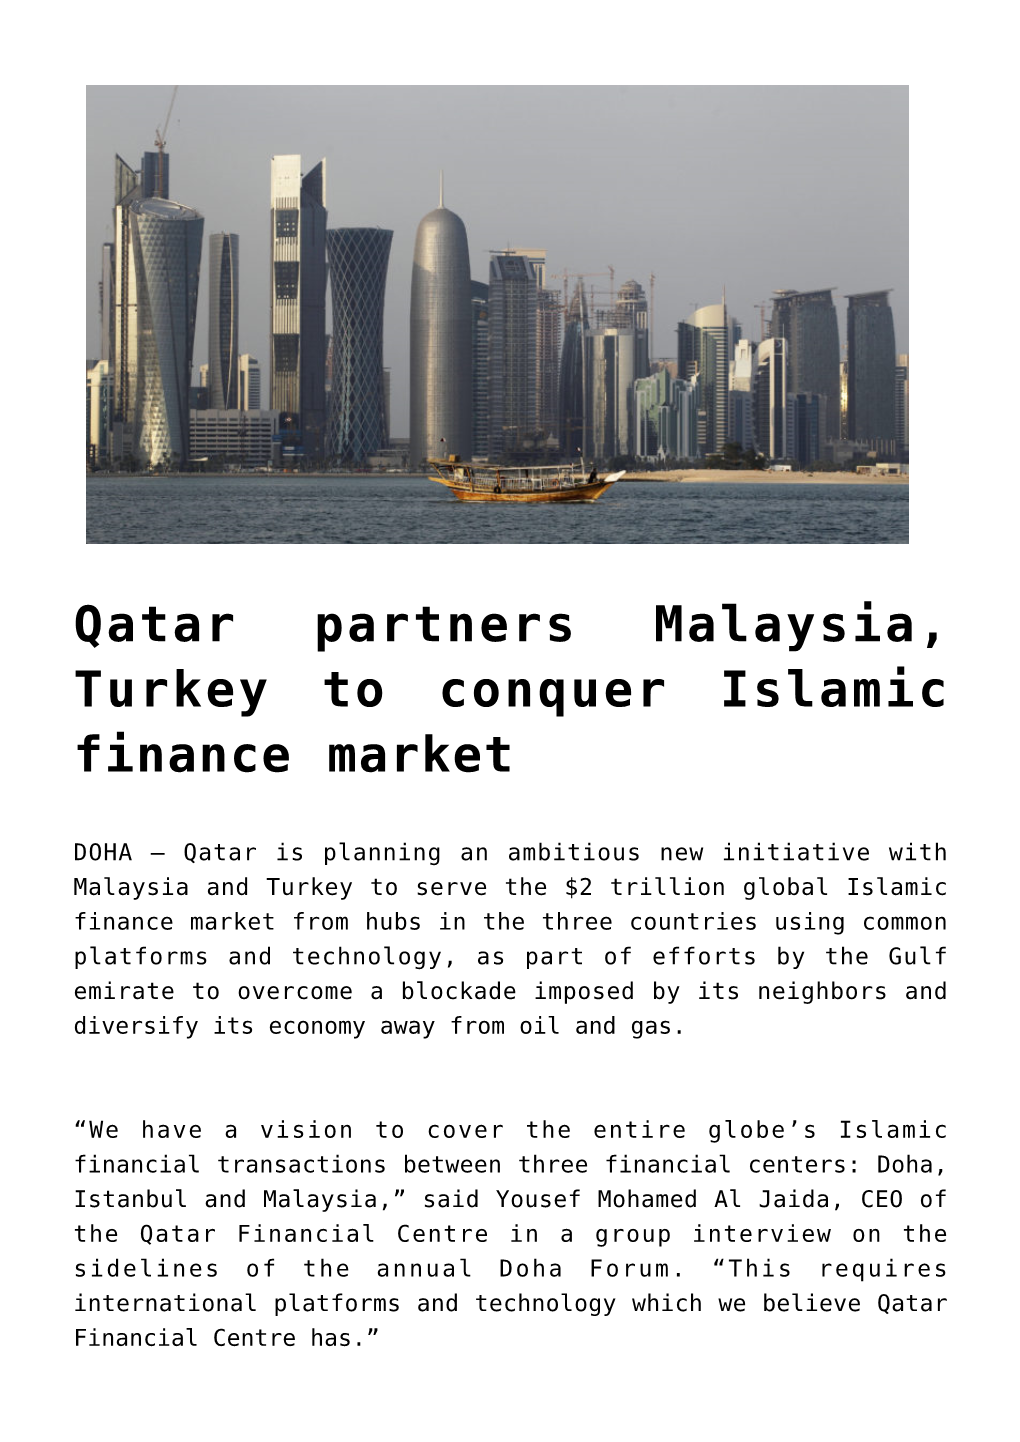 Qatar Partners Malaysia, Turkey to Conquer Islamic Finance Market